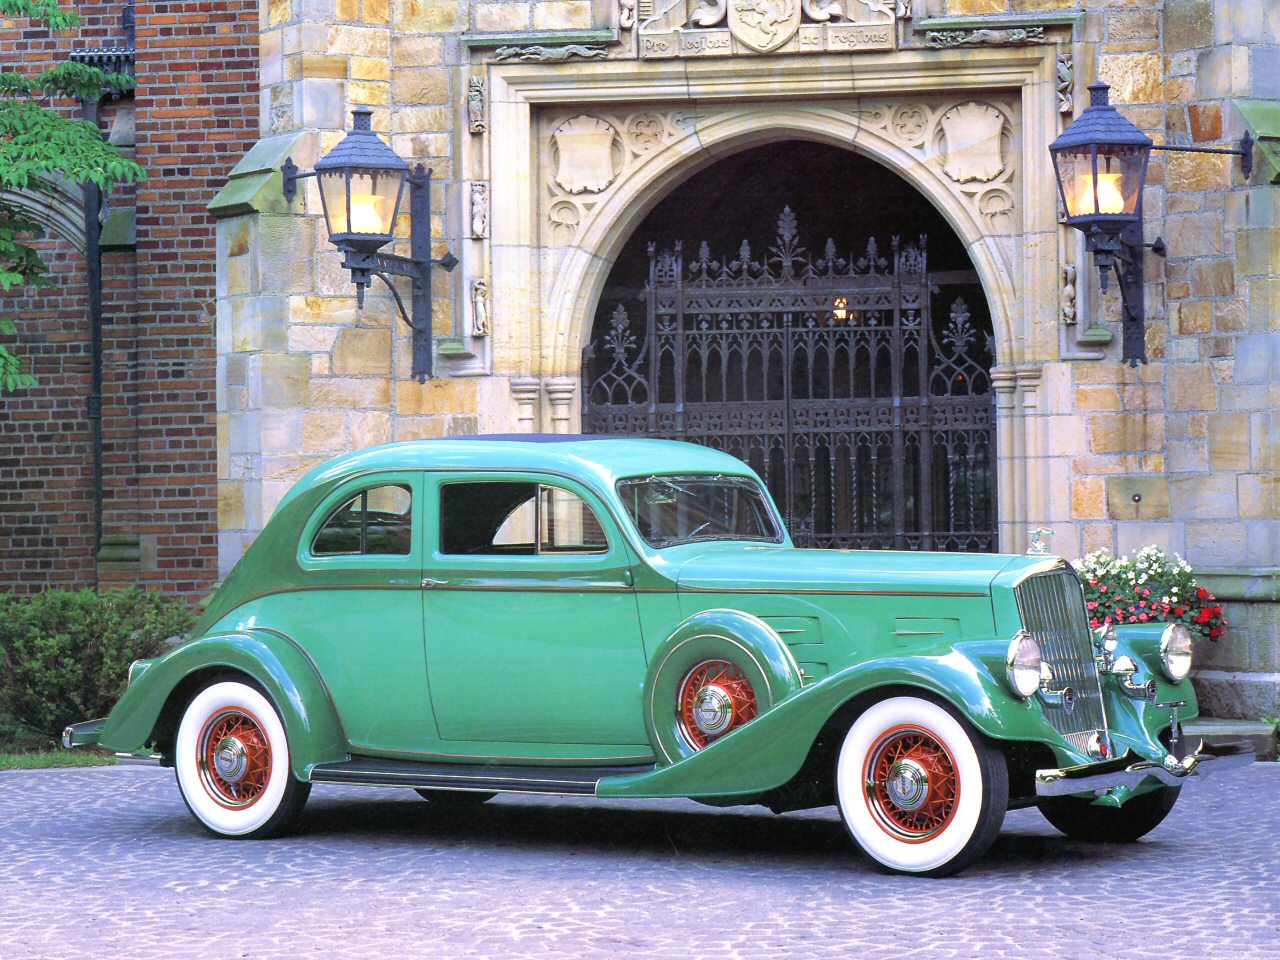 1934 Pierce Arrow Silver Arrow Green Fvr - Cars Wallpaper